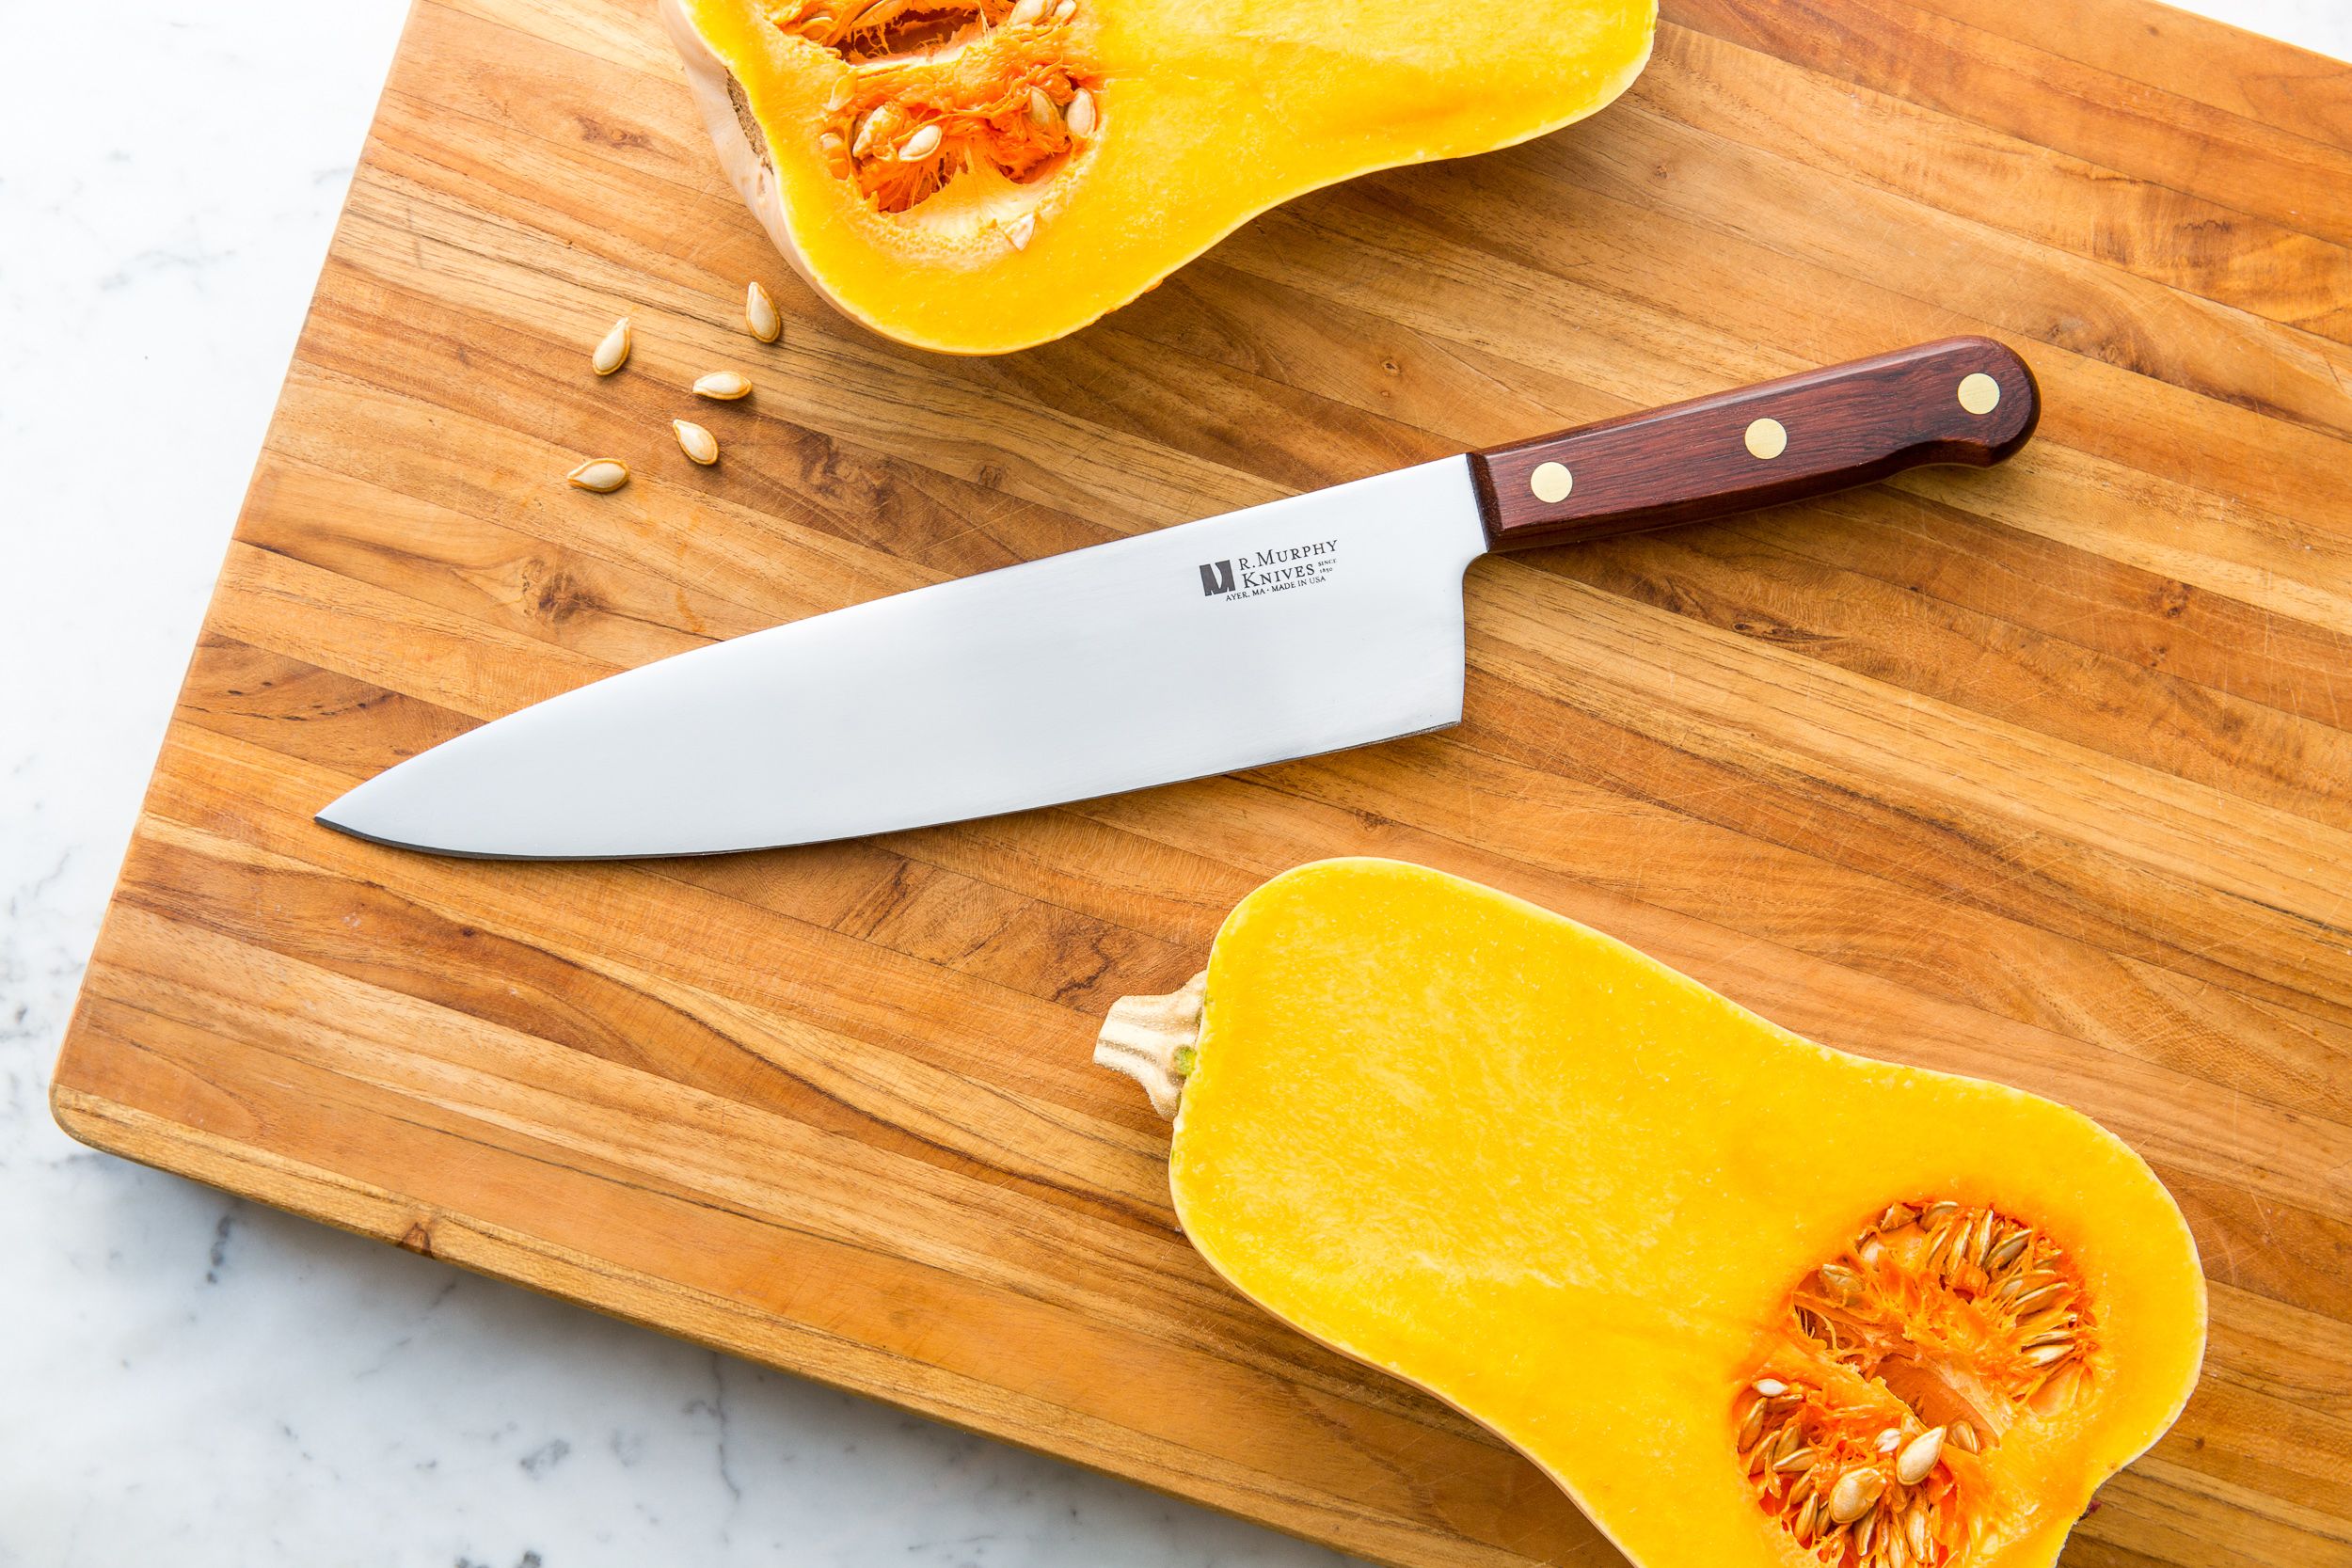 R. Murphy Chef's Knife 8 420HC Stainless Steel Blade, Bubinga